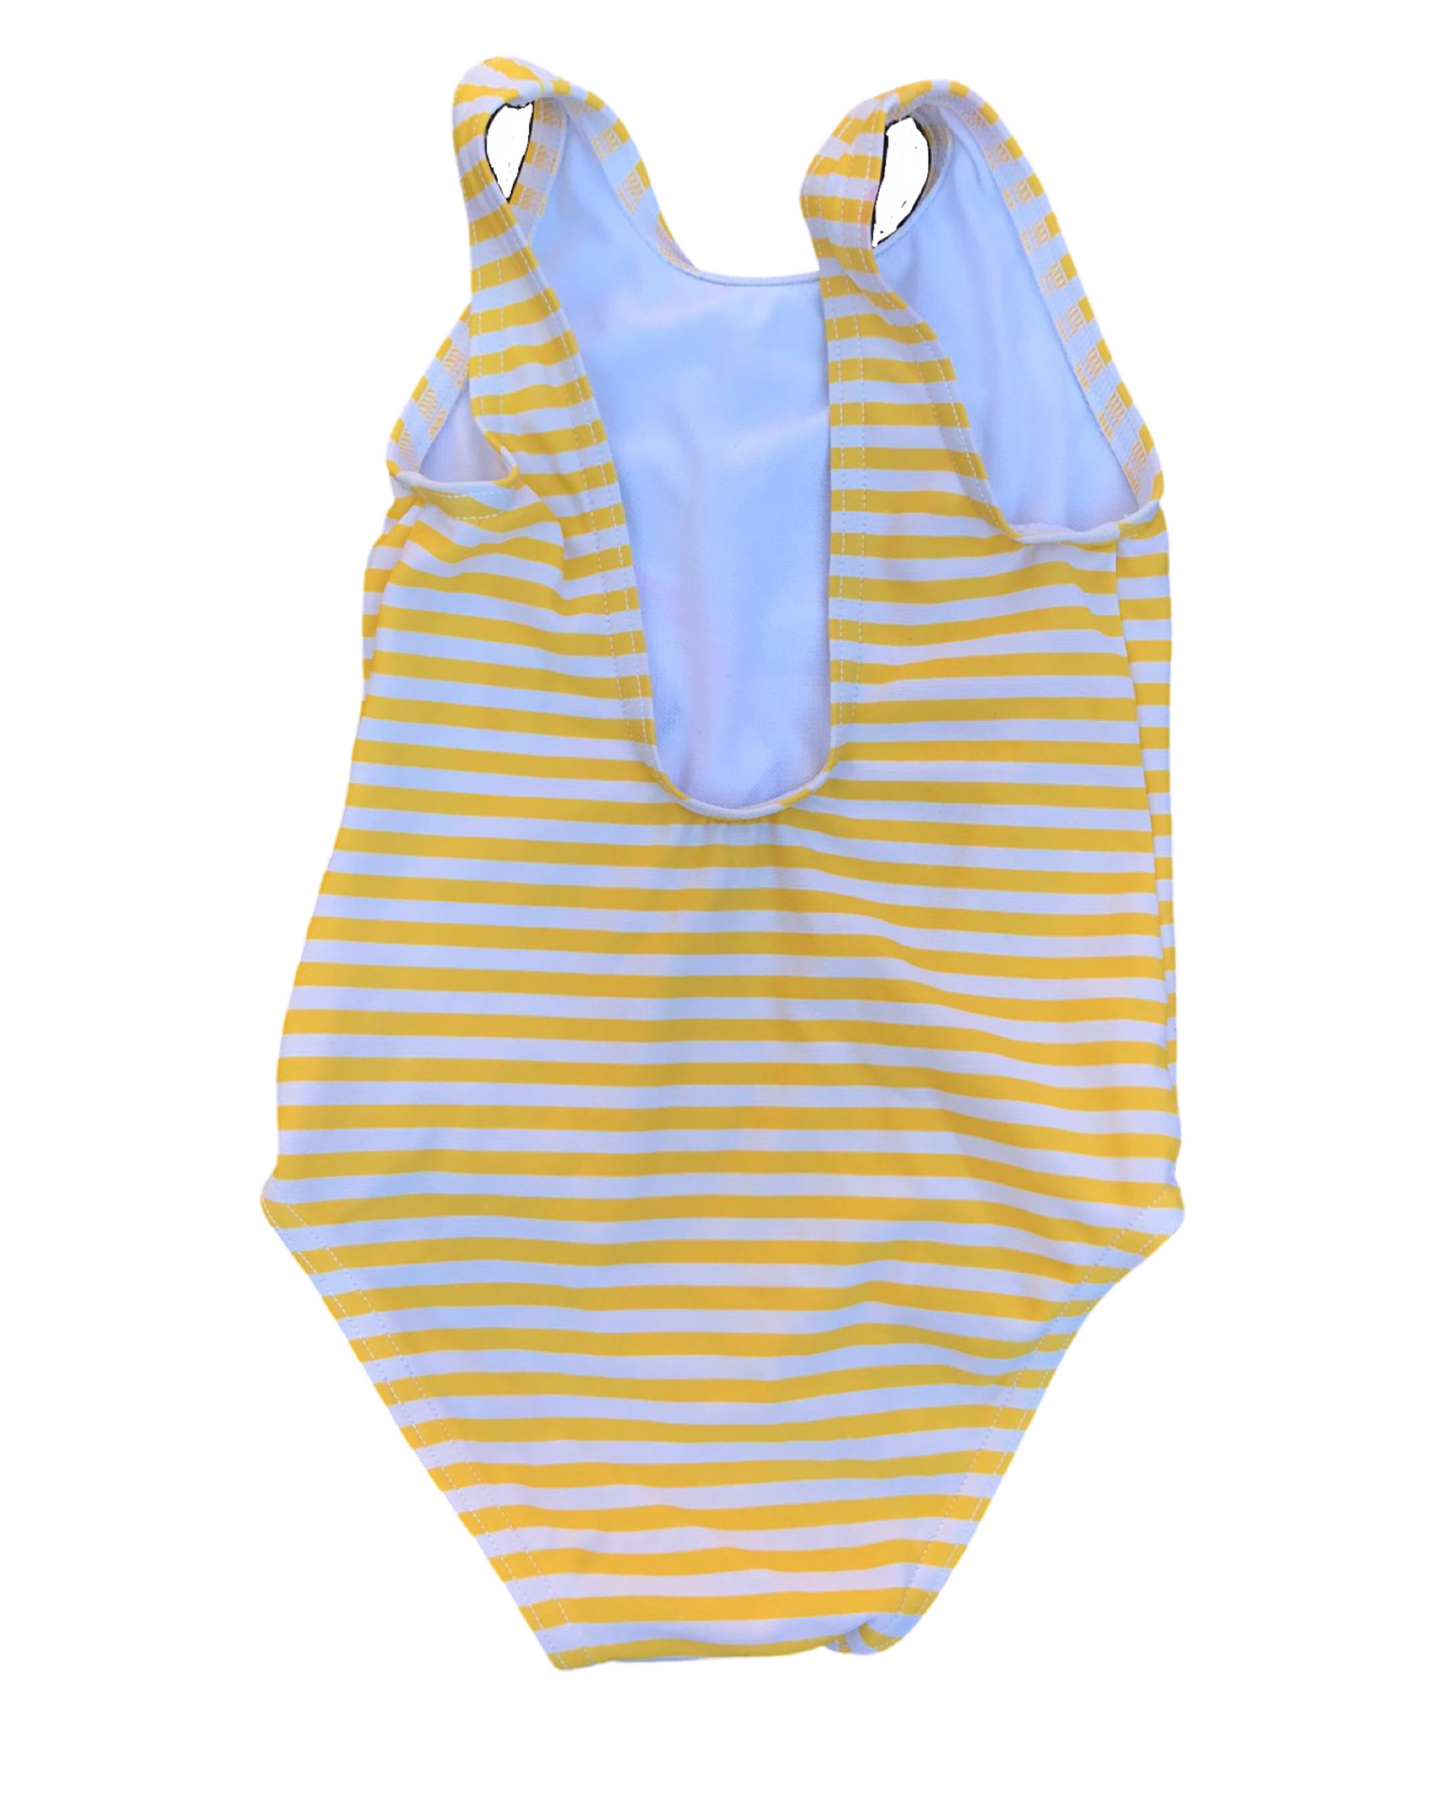 John Lewis yellow striped swimsuit with flamingo appliqué (size 9-12mths)